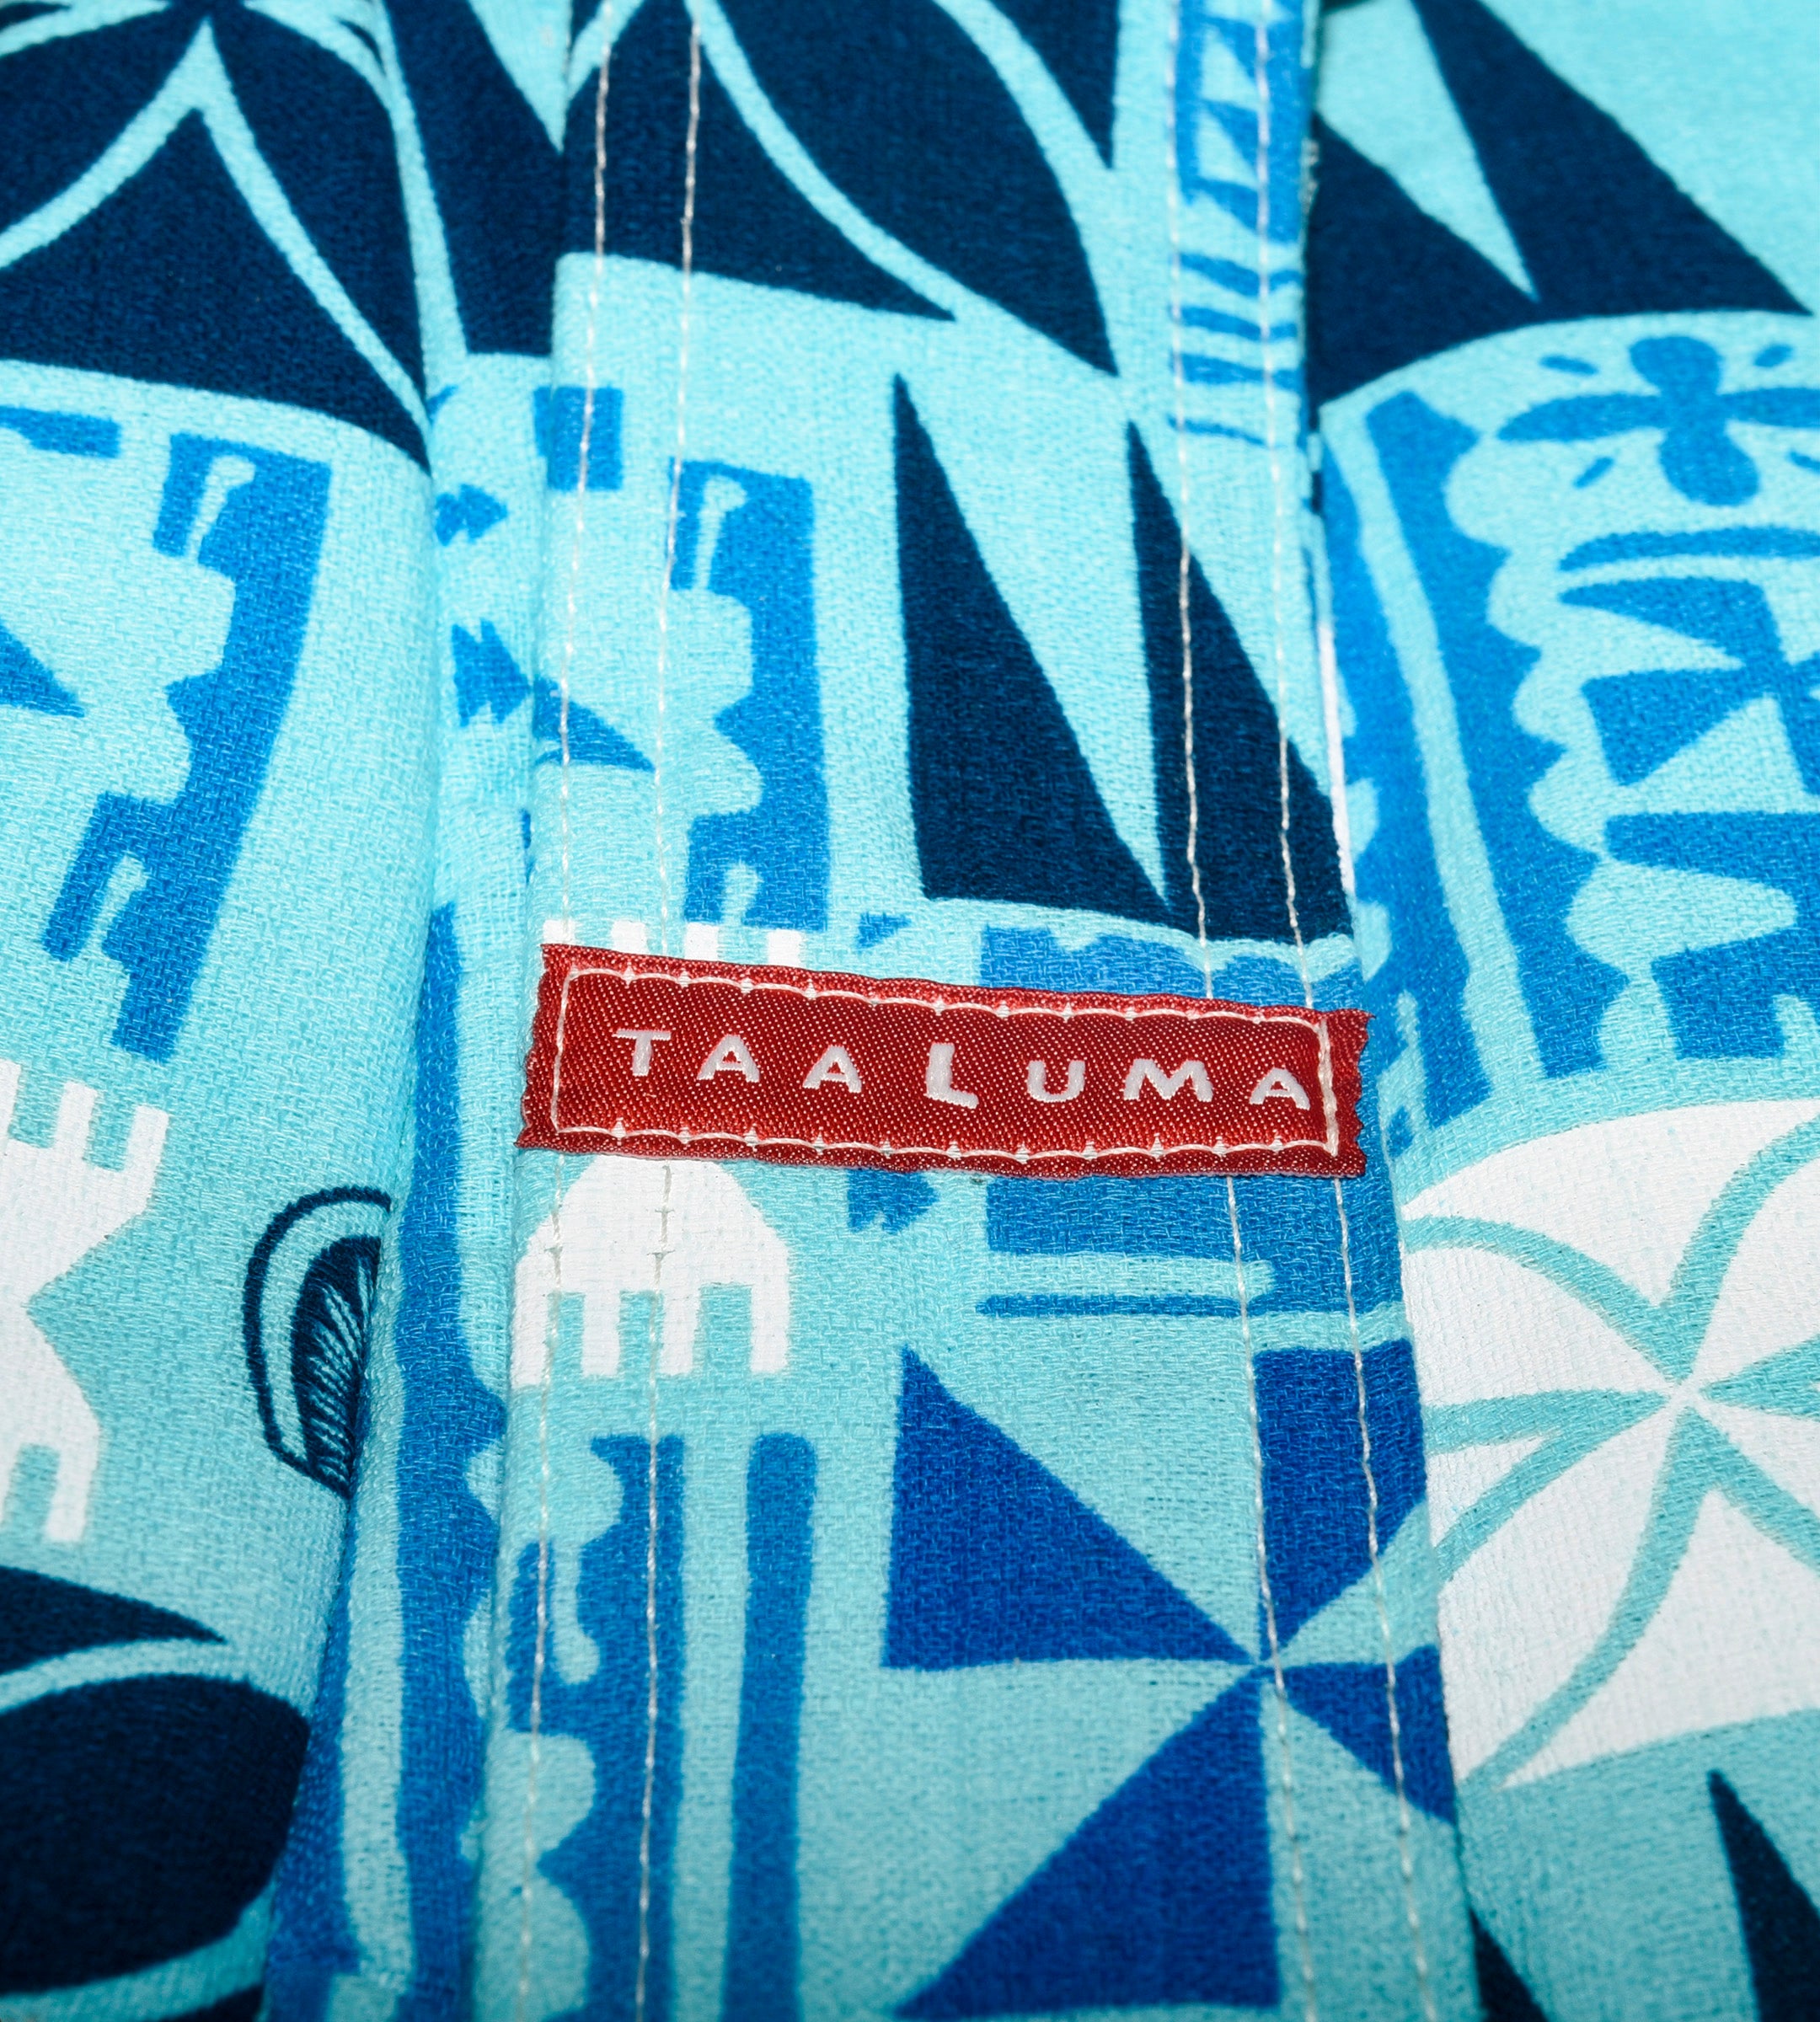 Tuvalu Tote (by Aaron John)